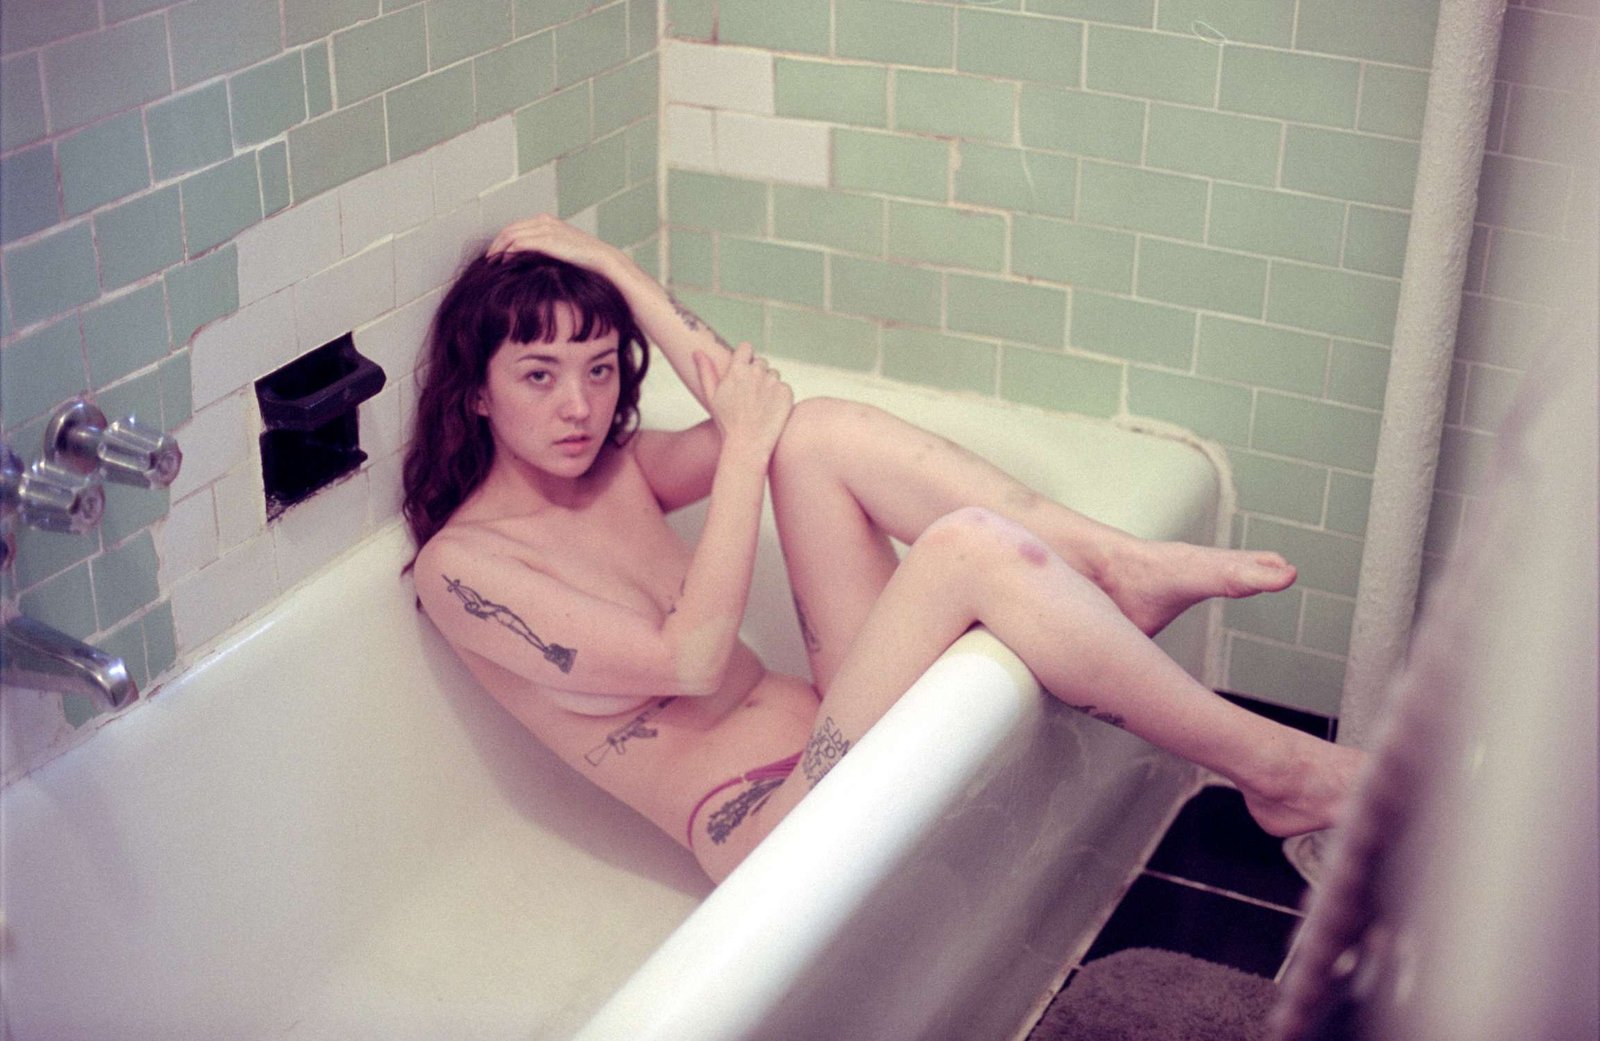 Juno LTK sexy topless model in tub 35mm film